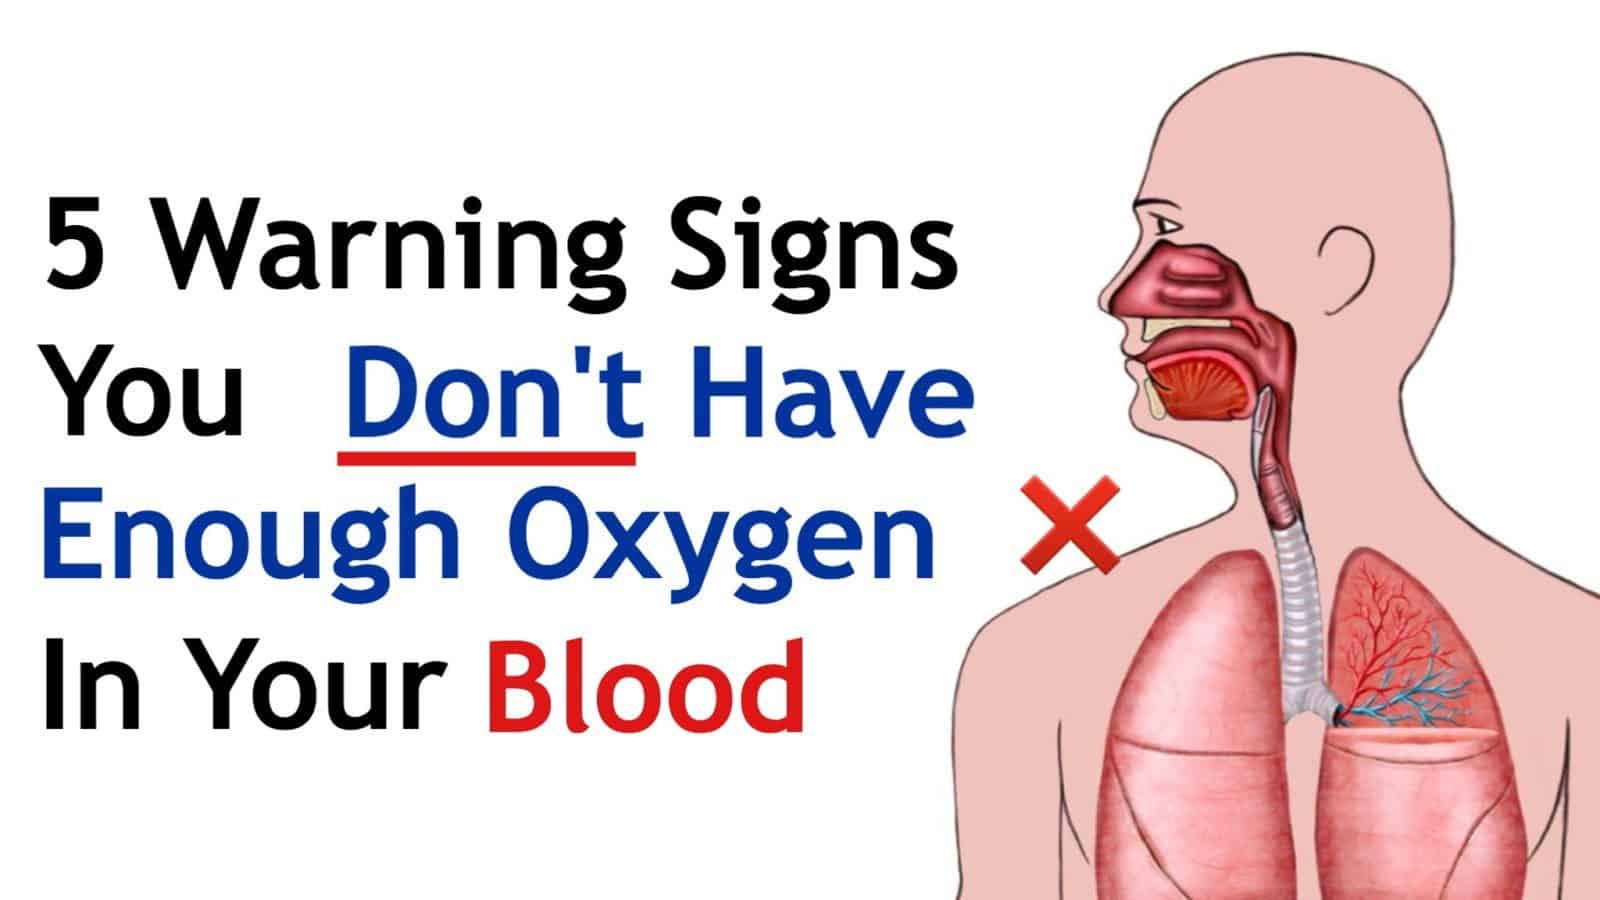 5 Warning Signs You Don